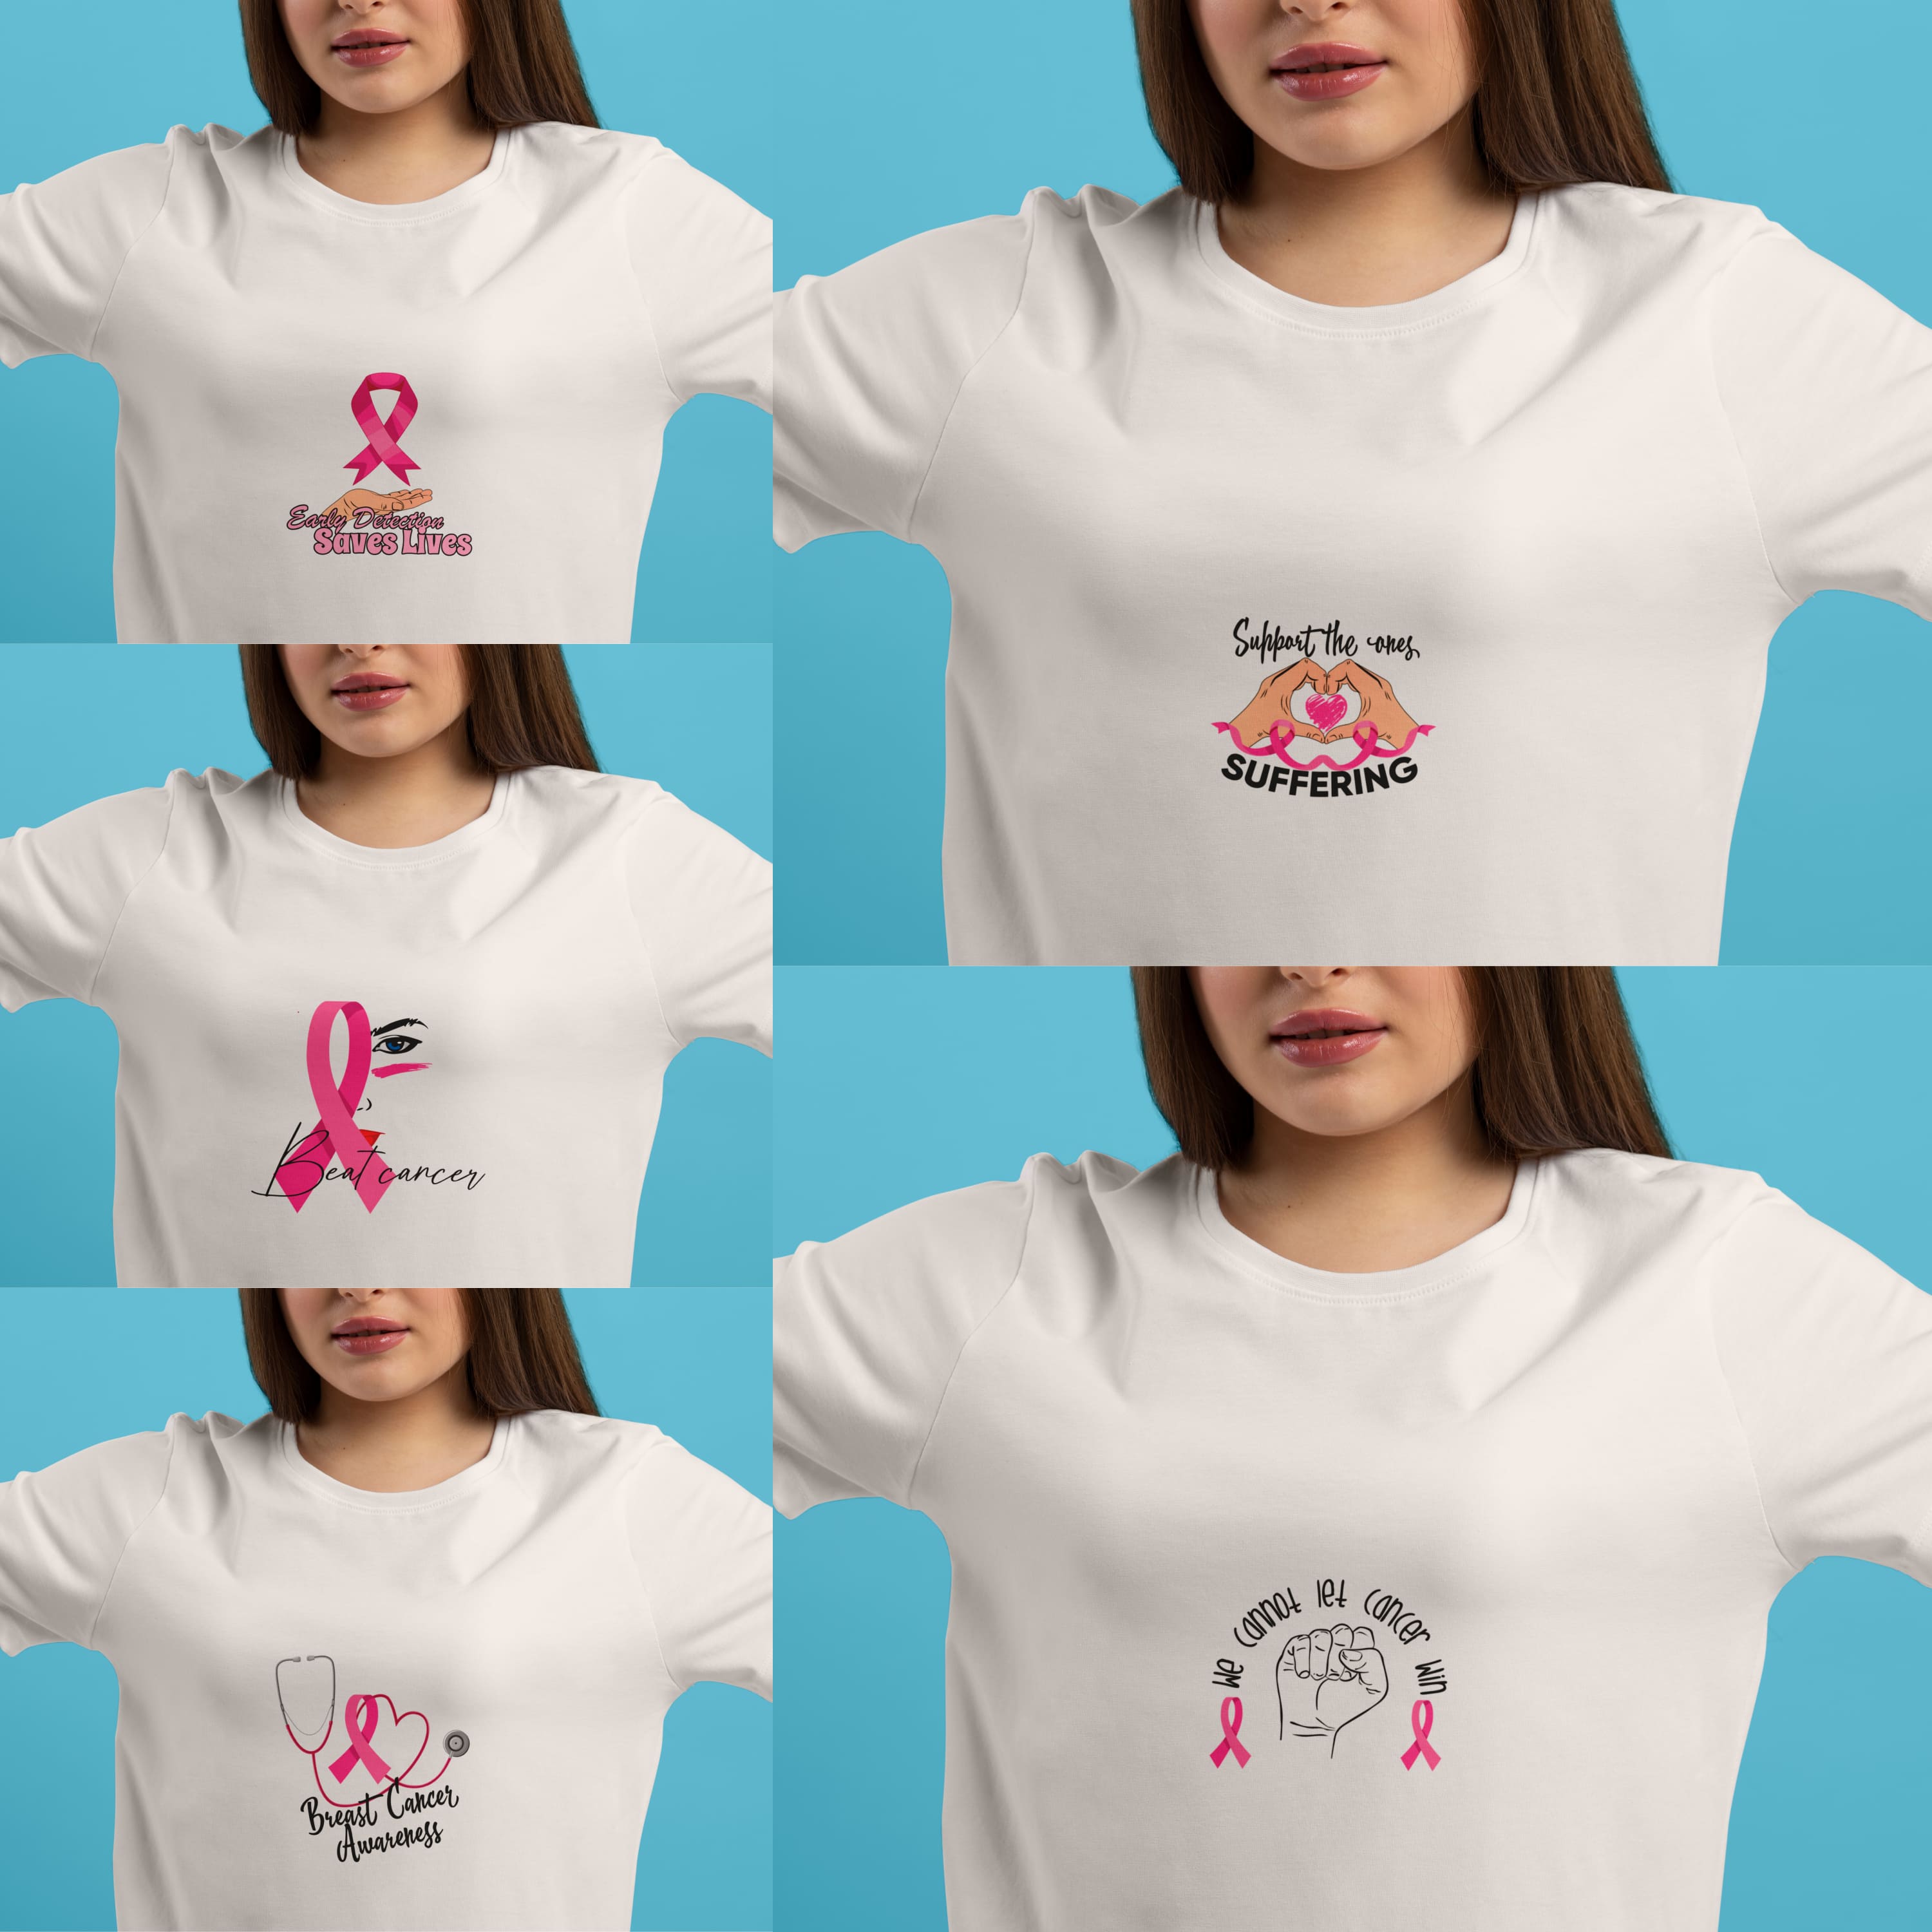 breast cancer awareness SVG T-shirt Designs Bundle cover.